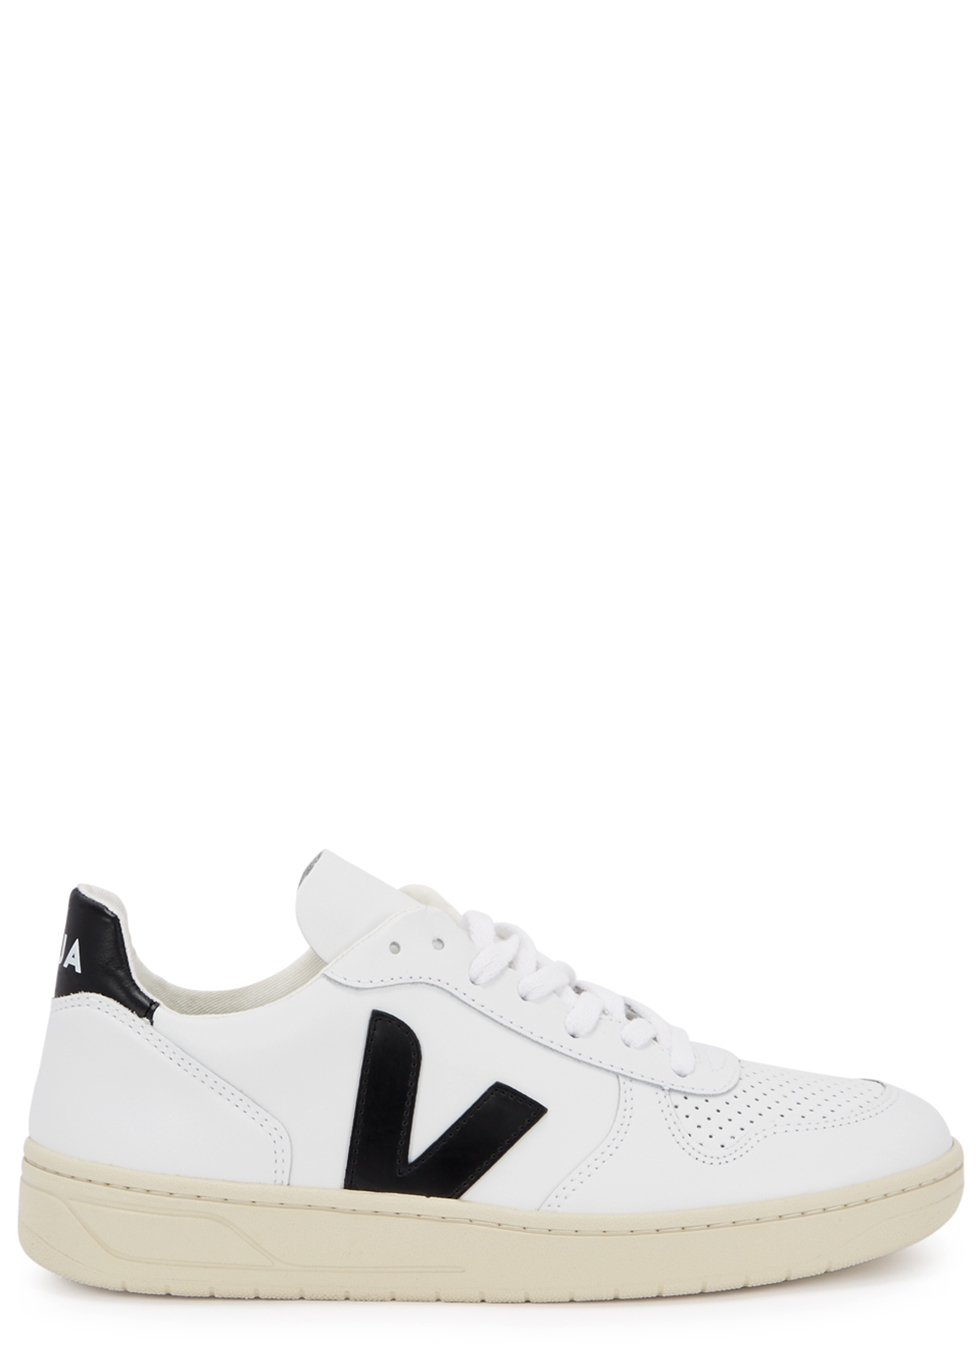 Veja V-10 white leather sneakers - Harvey Nichols